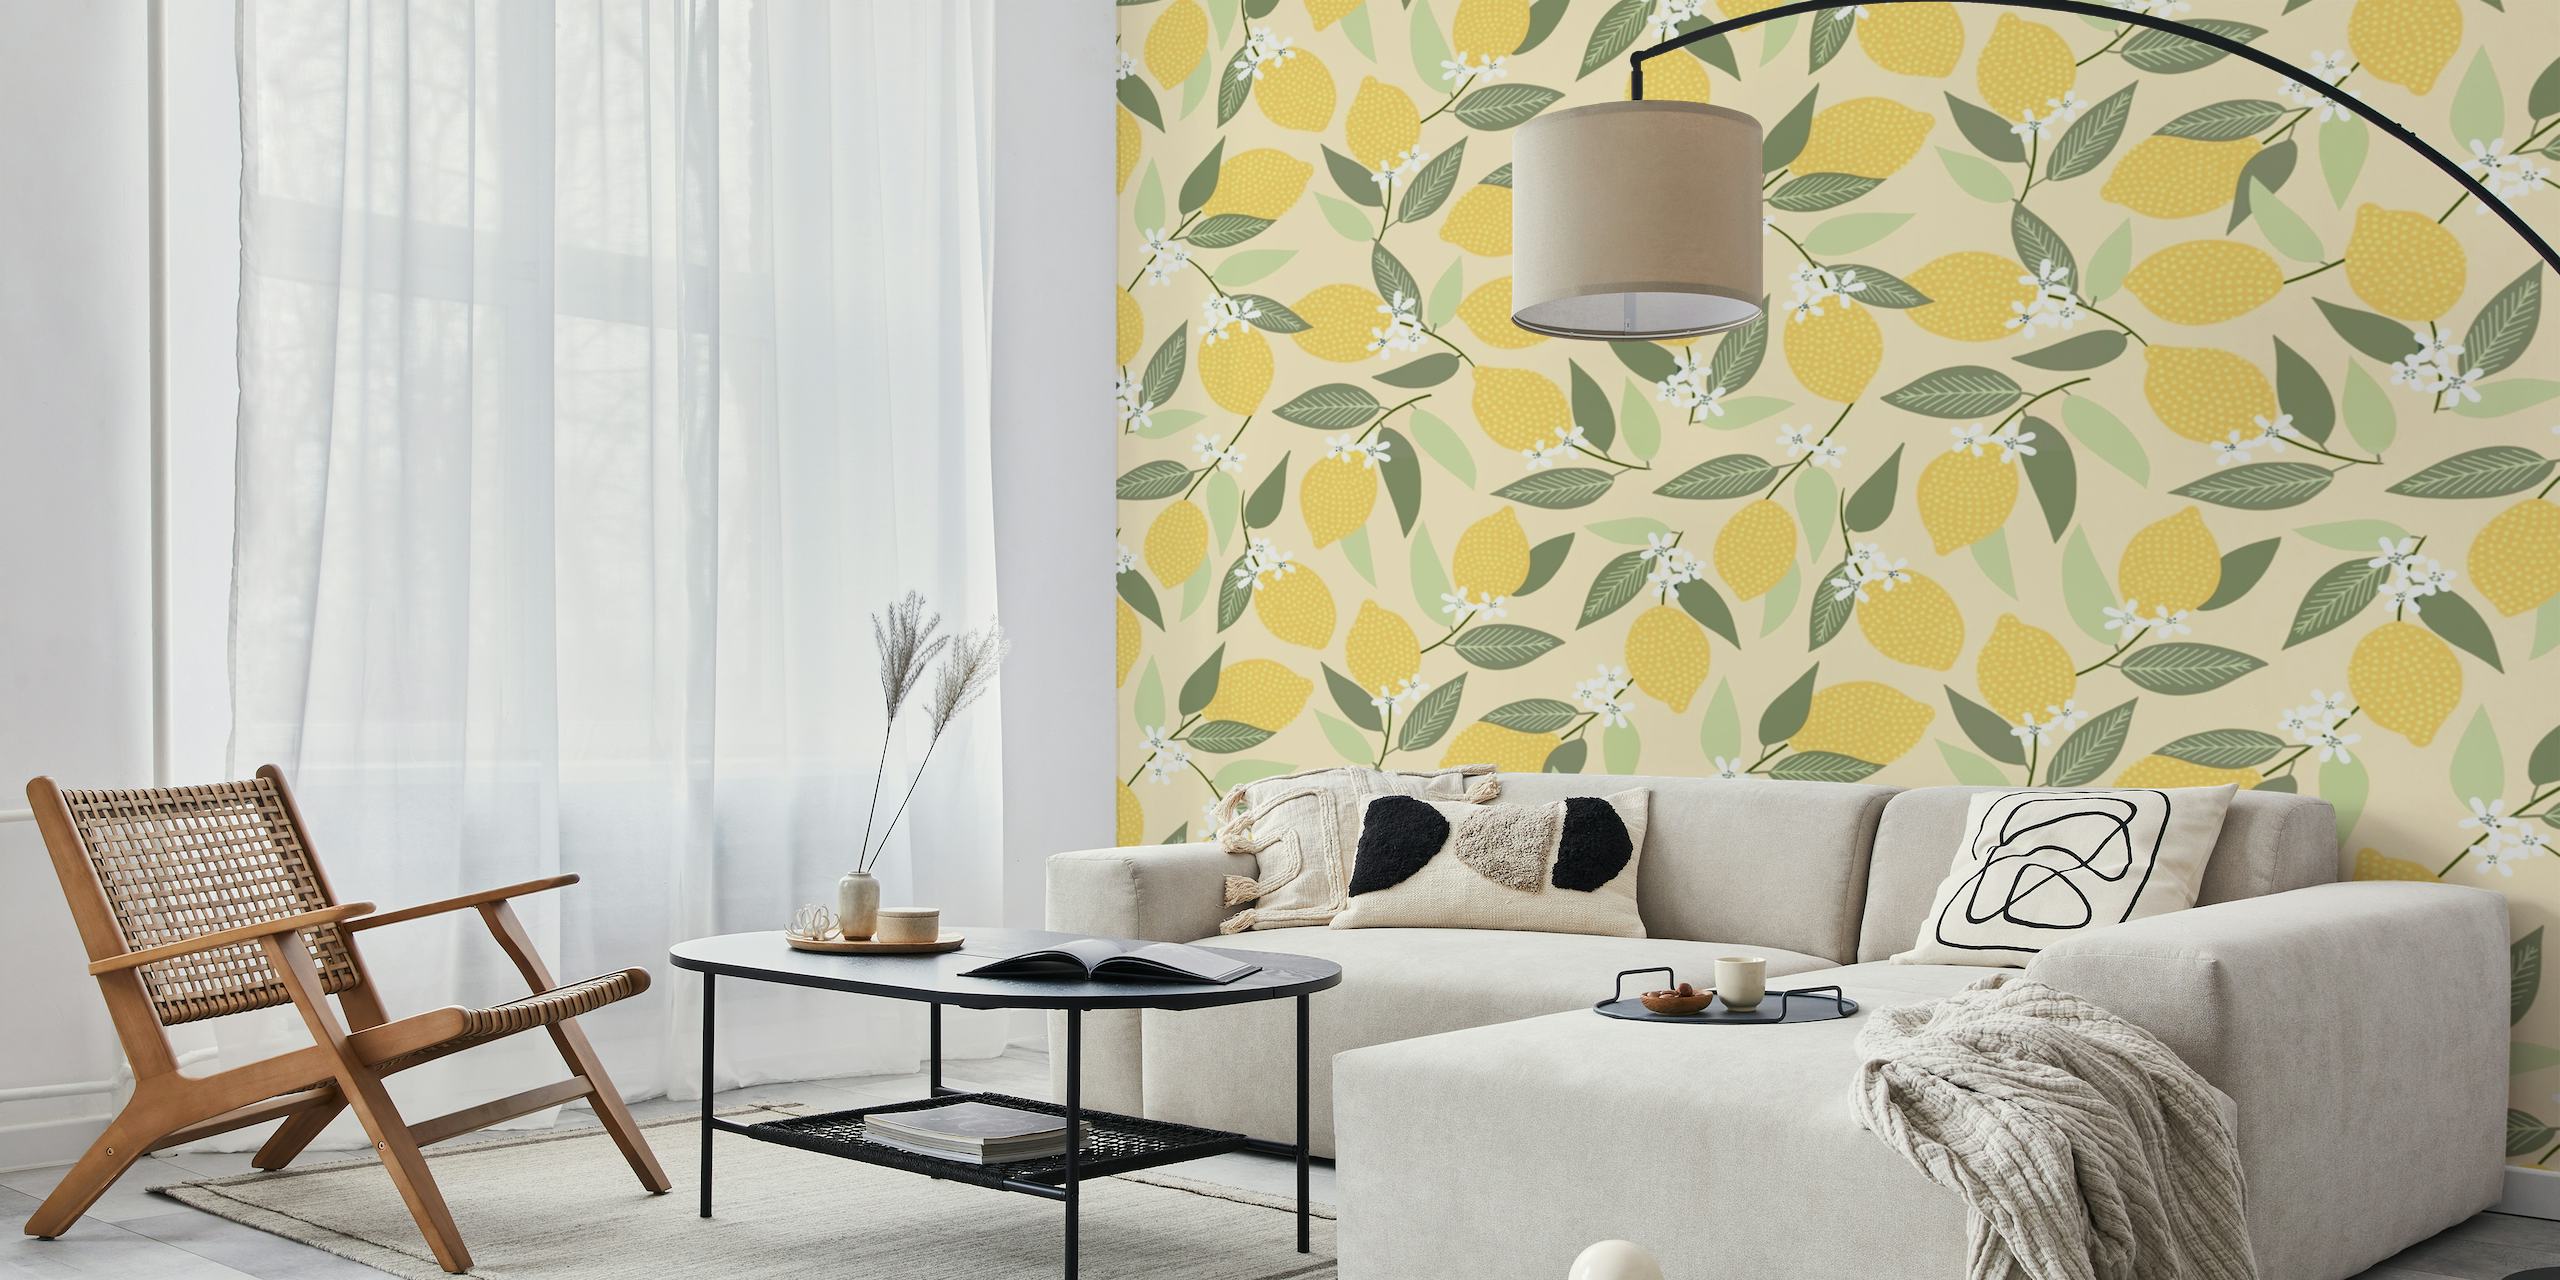 Lemon and leaves pattern wall mural for fresh room decor